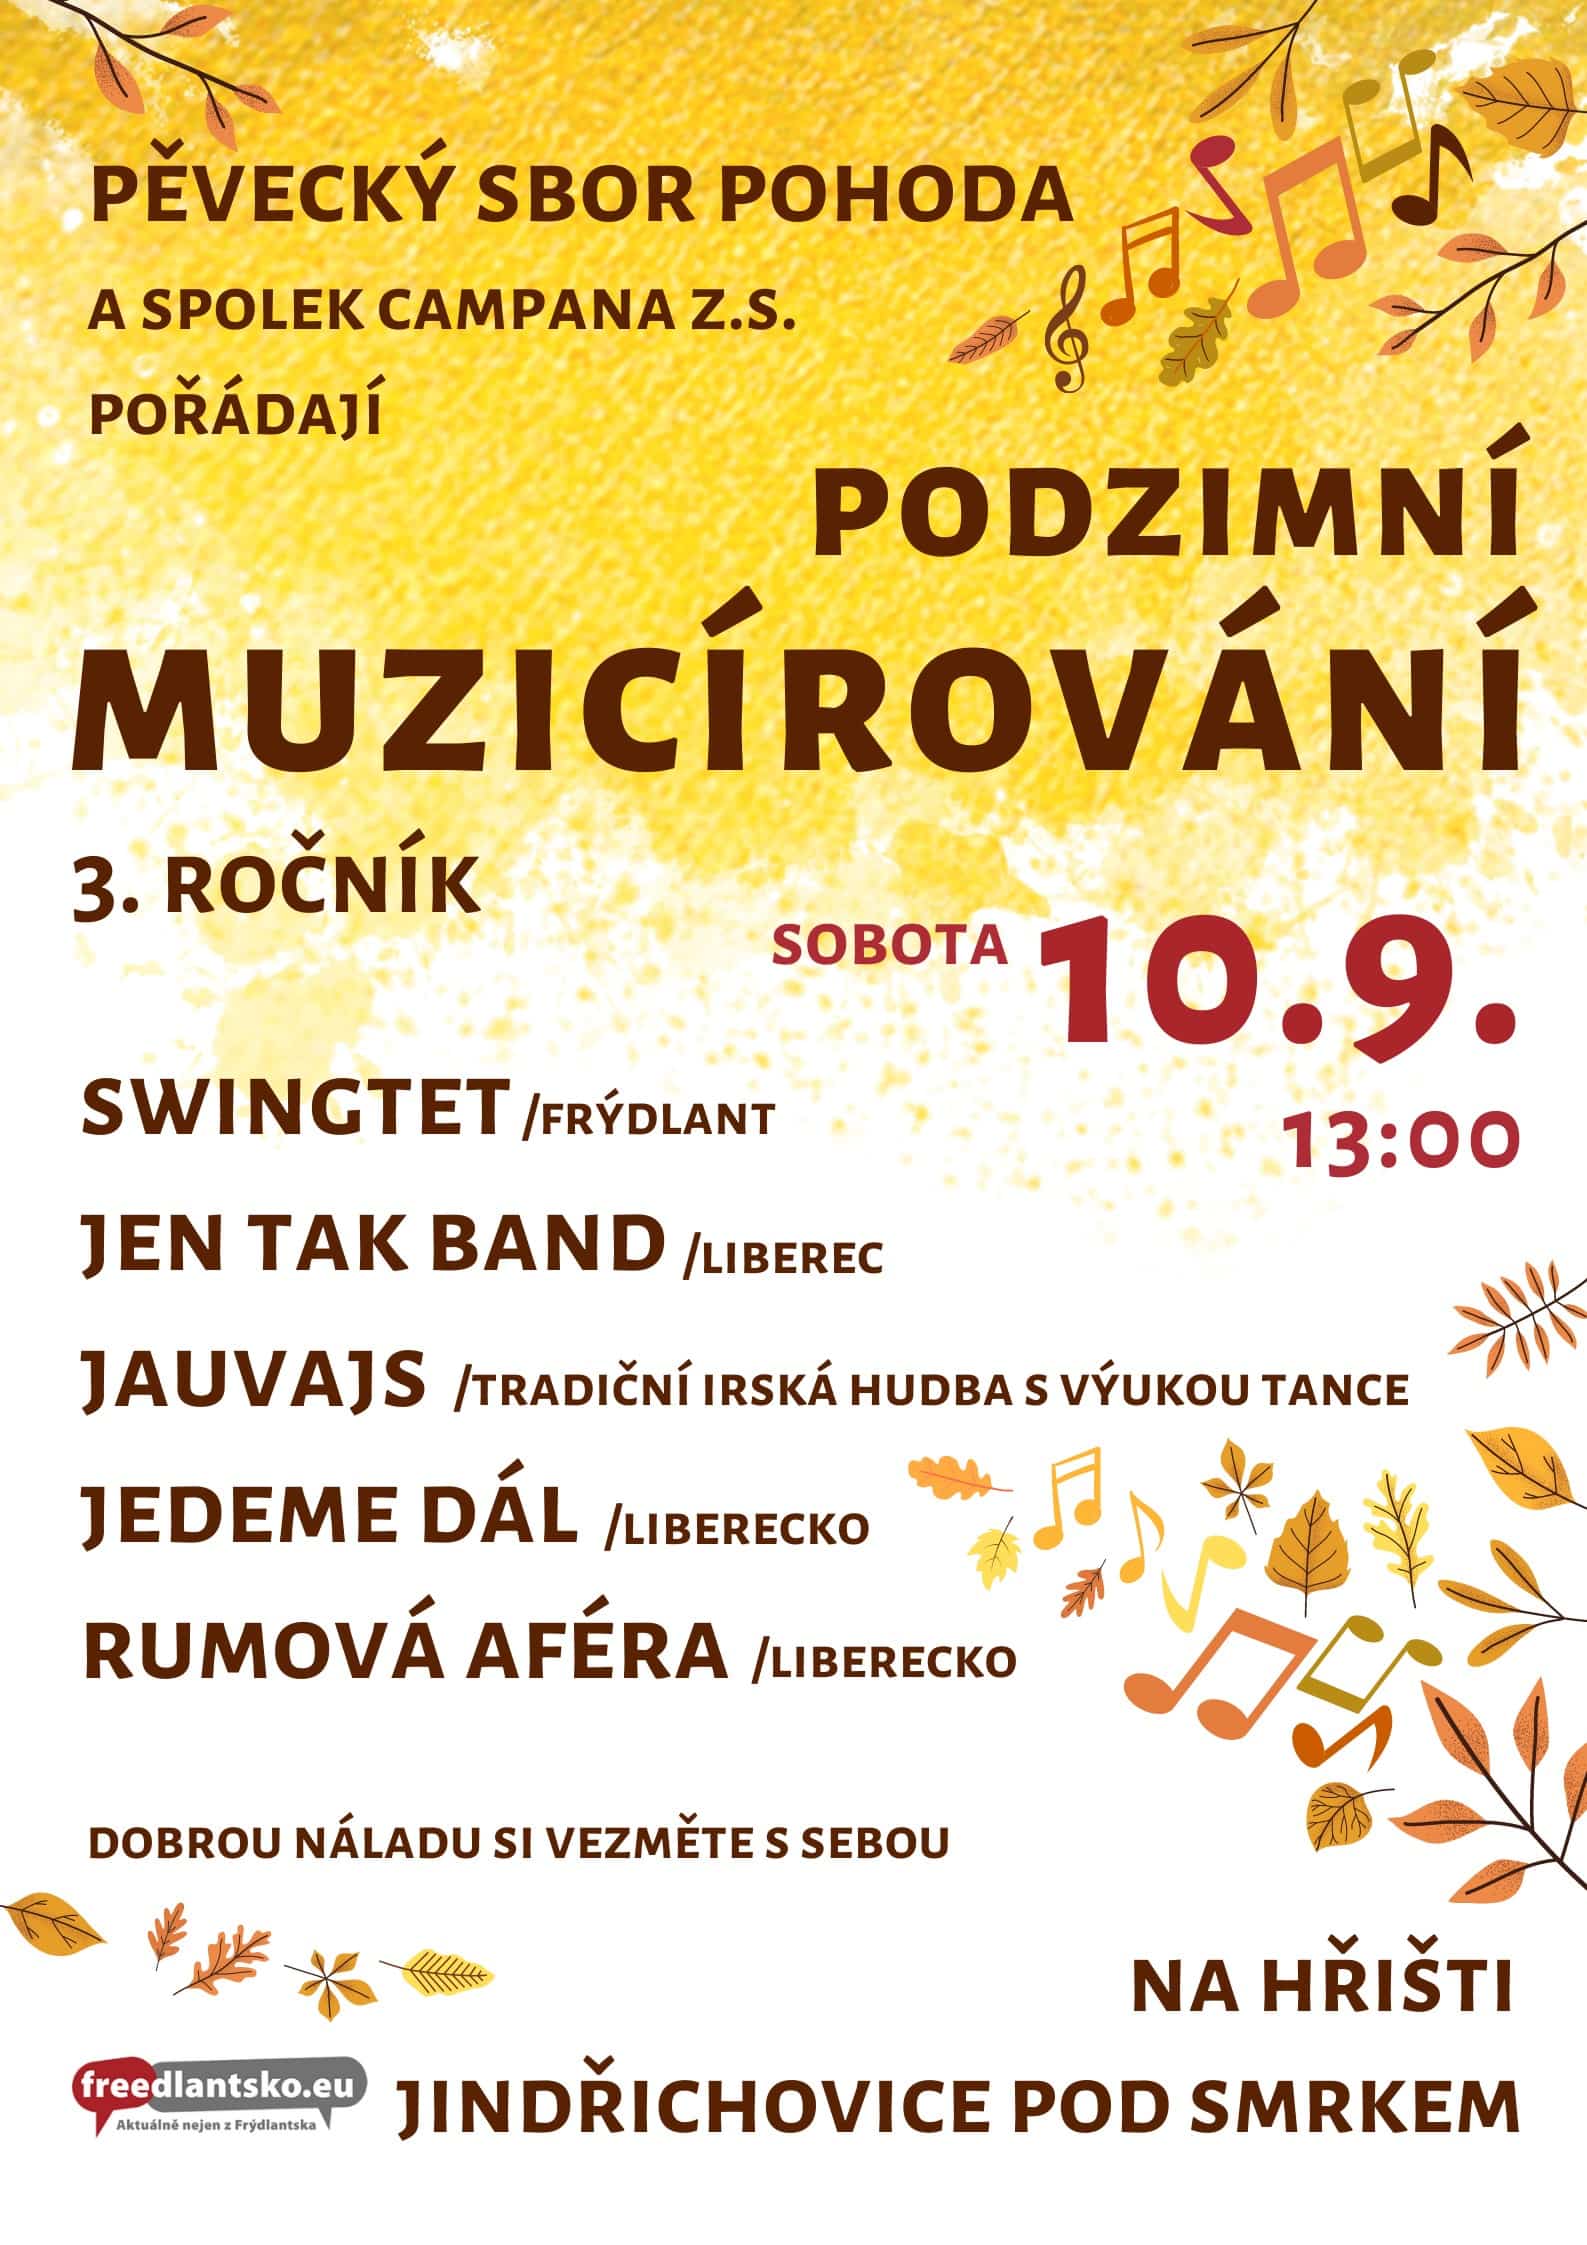 726 podzimni muzicirovani plakat jindrichovice 2022 frydlantsko